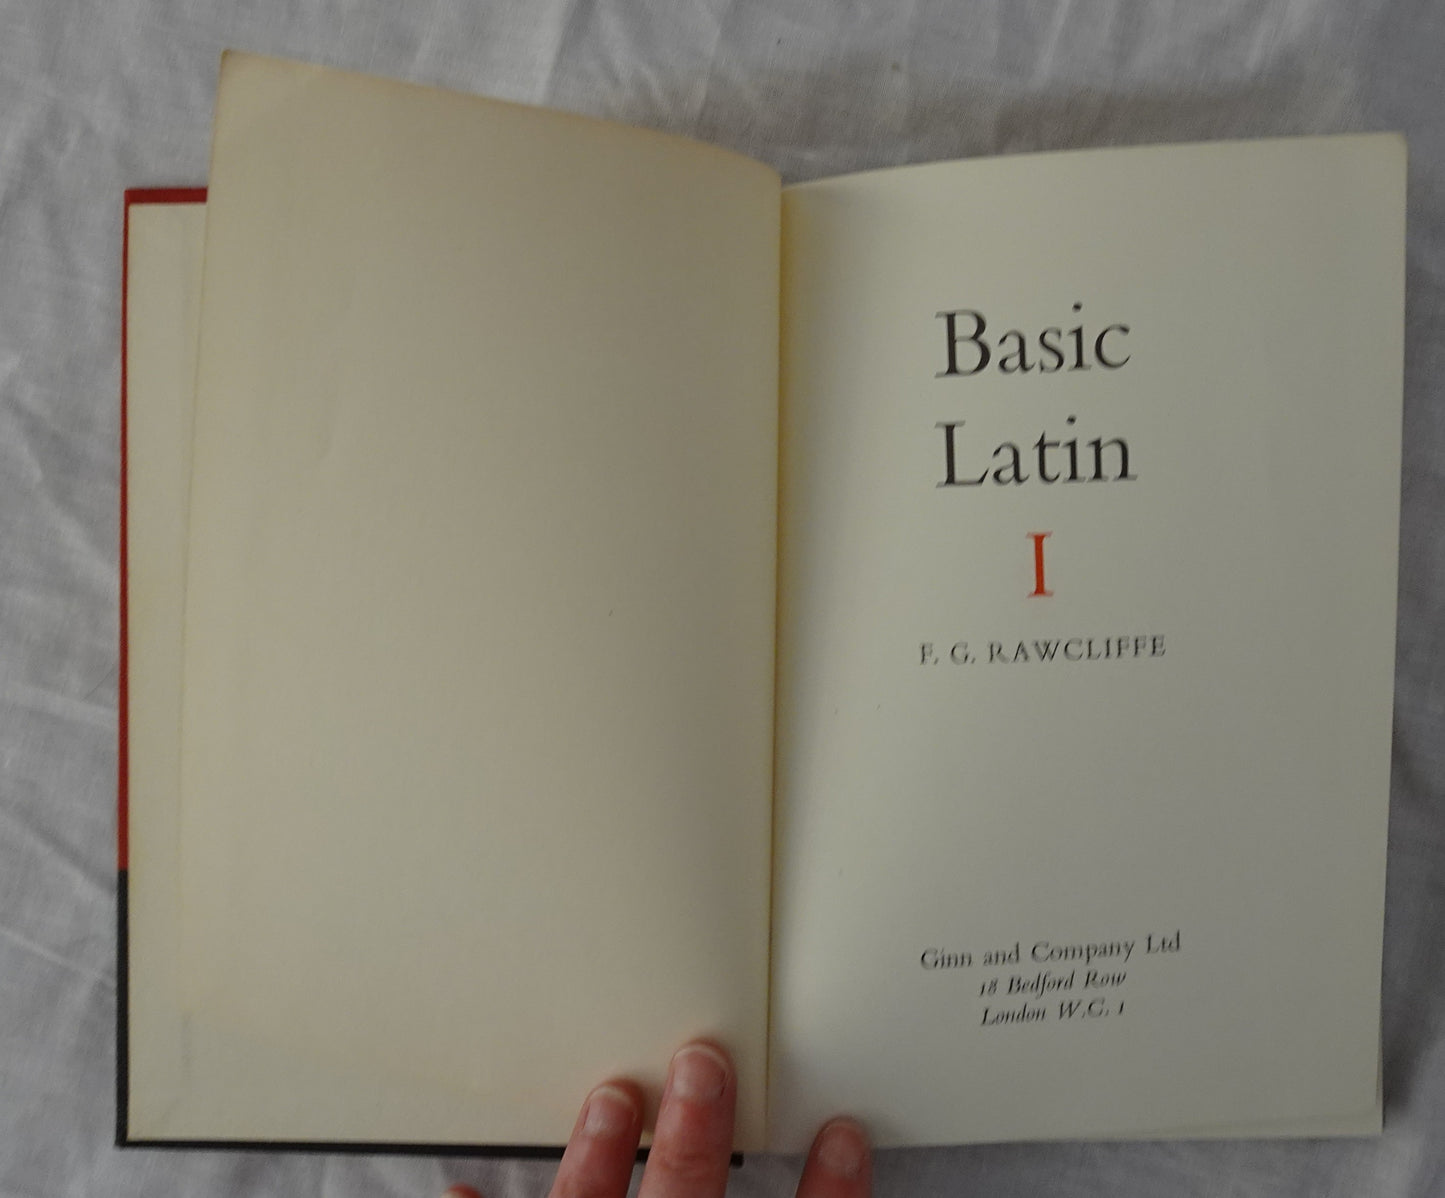 Basic Latin I by F. G. Rawcliffe